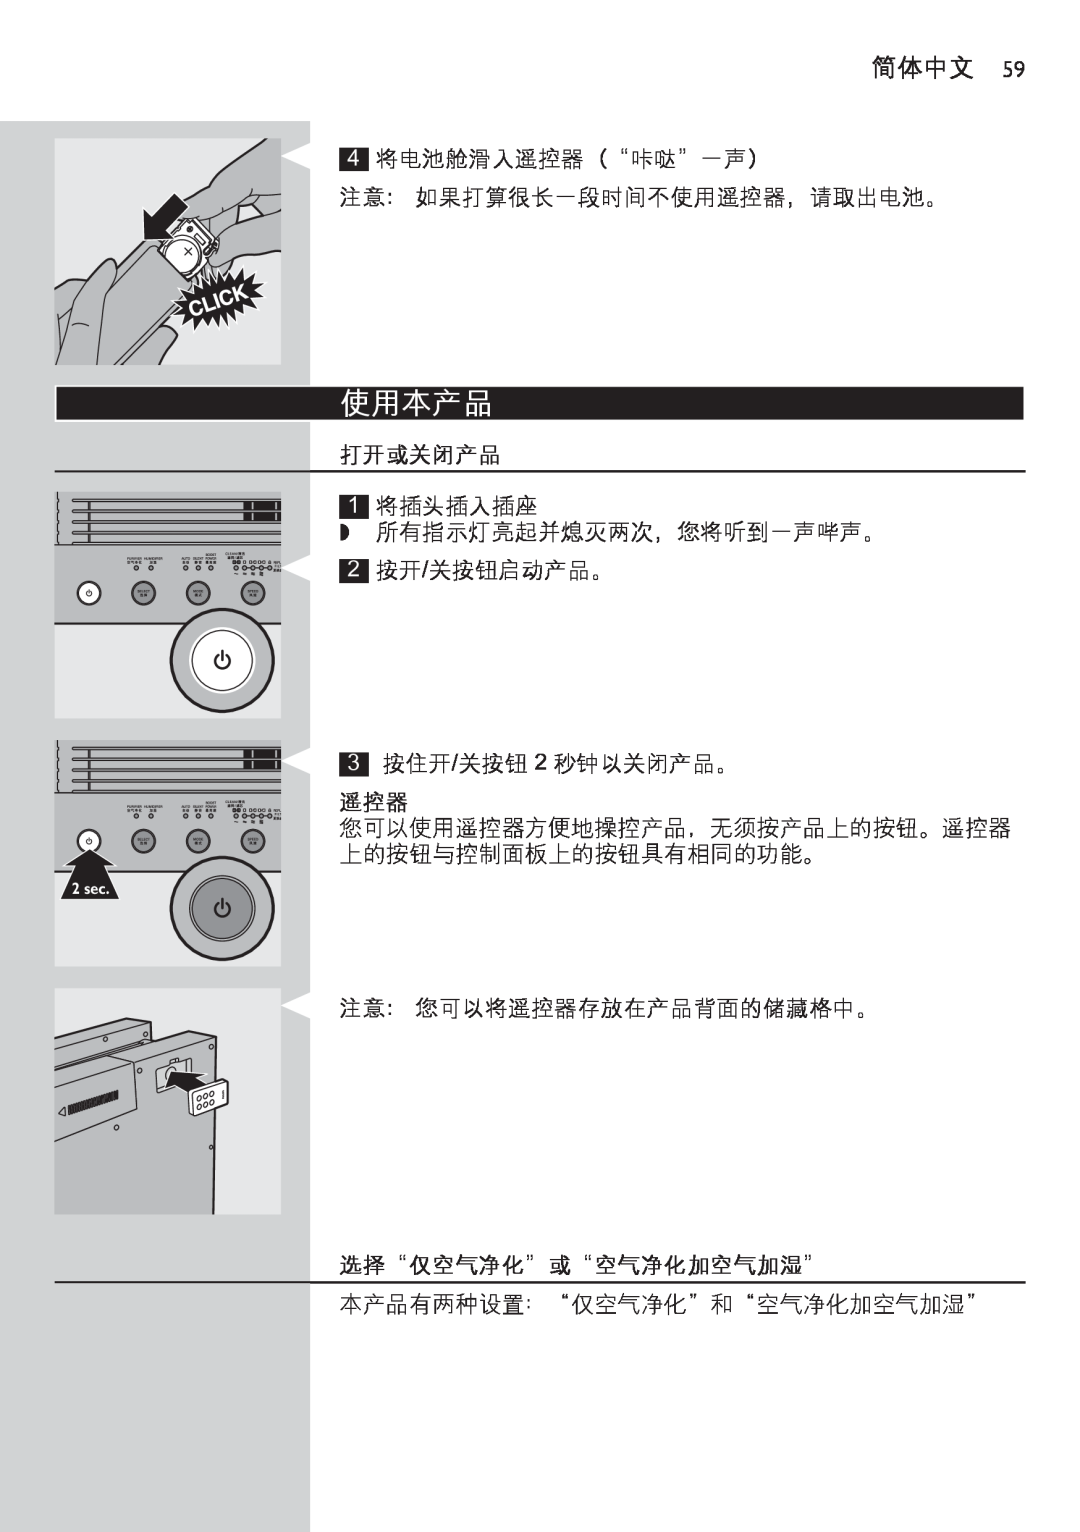 Philips AC4083 manual 使用本产品, 打开或关闭产品, 选择“仅空气净化”或“空气净化加空气加湿”, 简体中文, 2 sec 